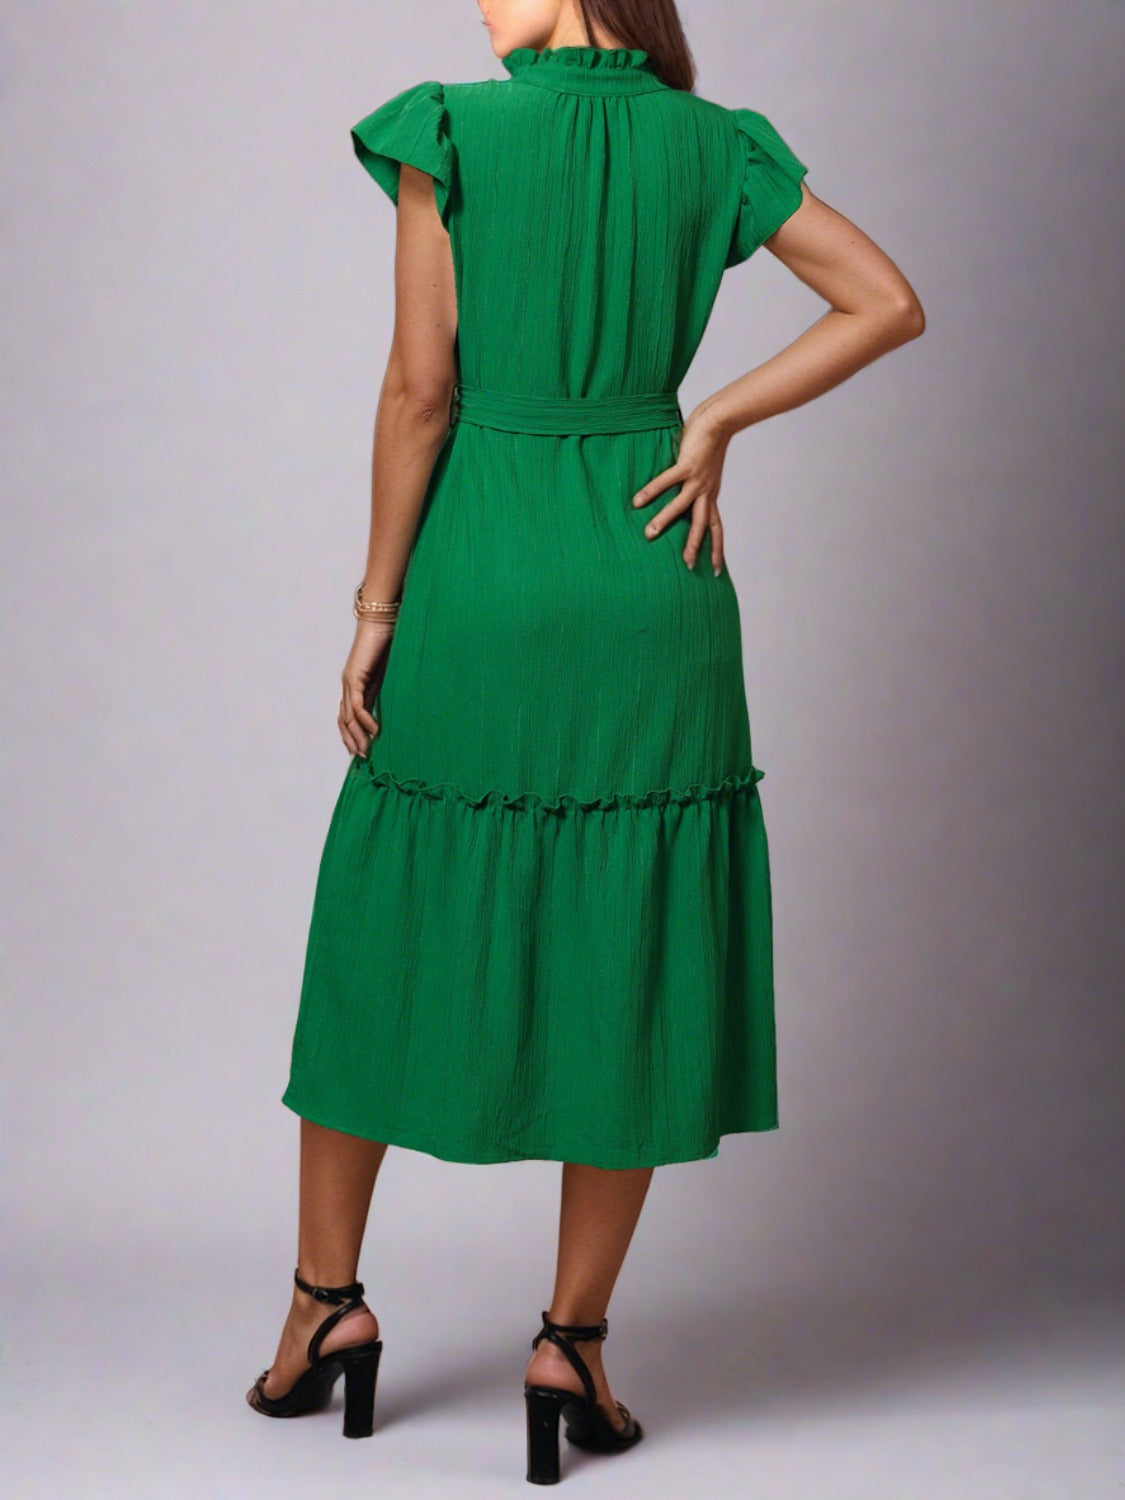 TEEK - Mid-Green Tied Notched Cap Sleeve Dress DRESS TEEK Trend   